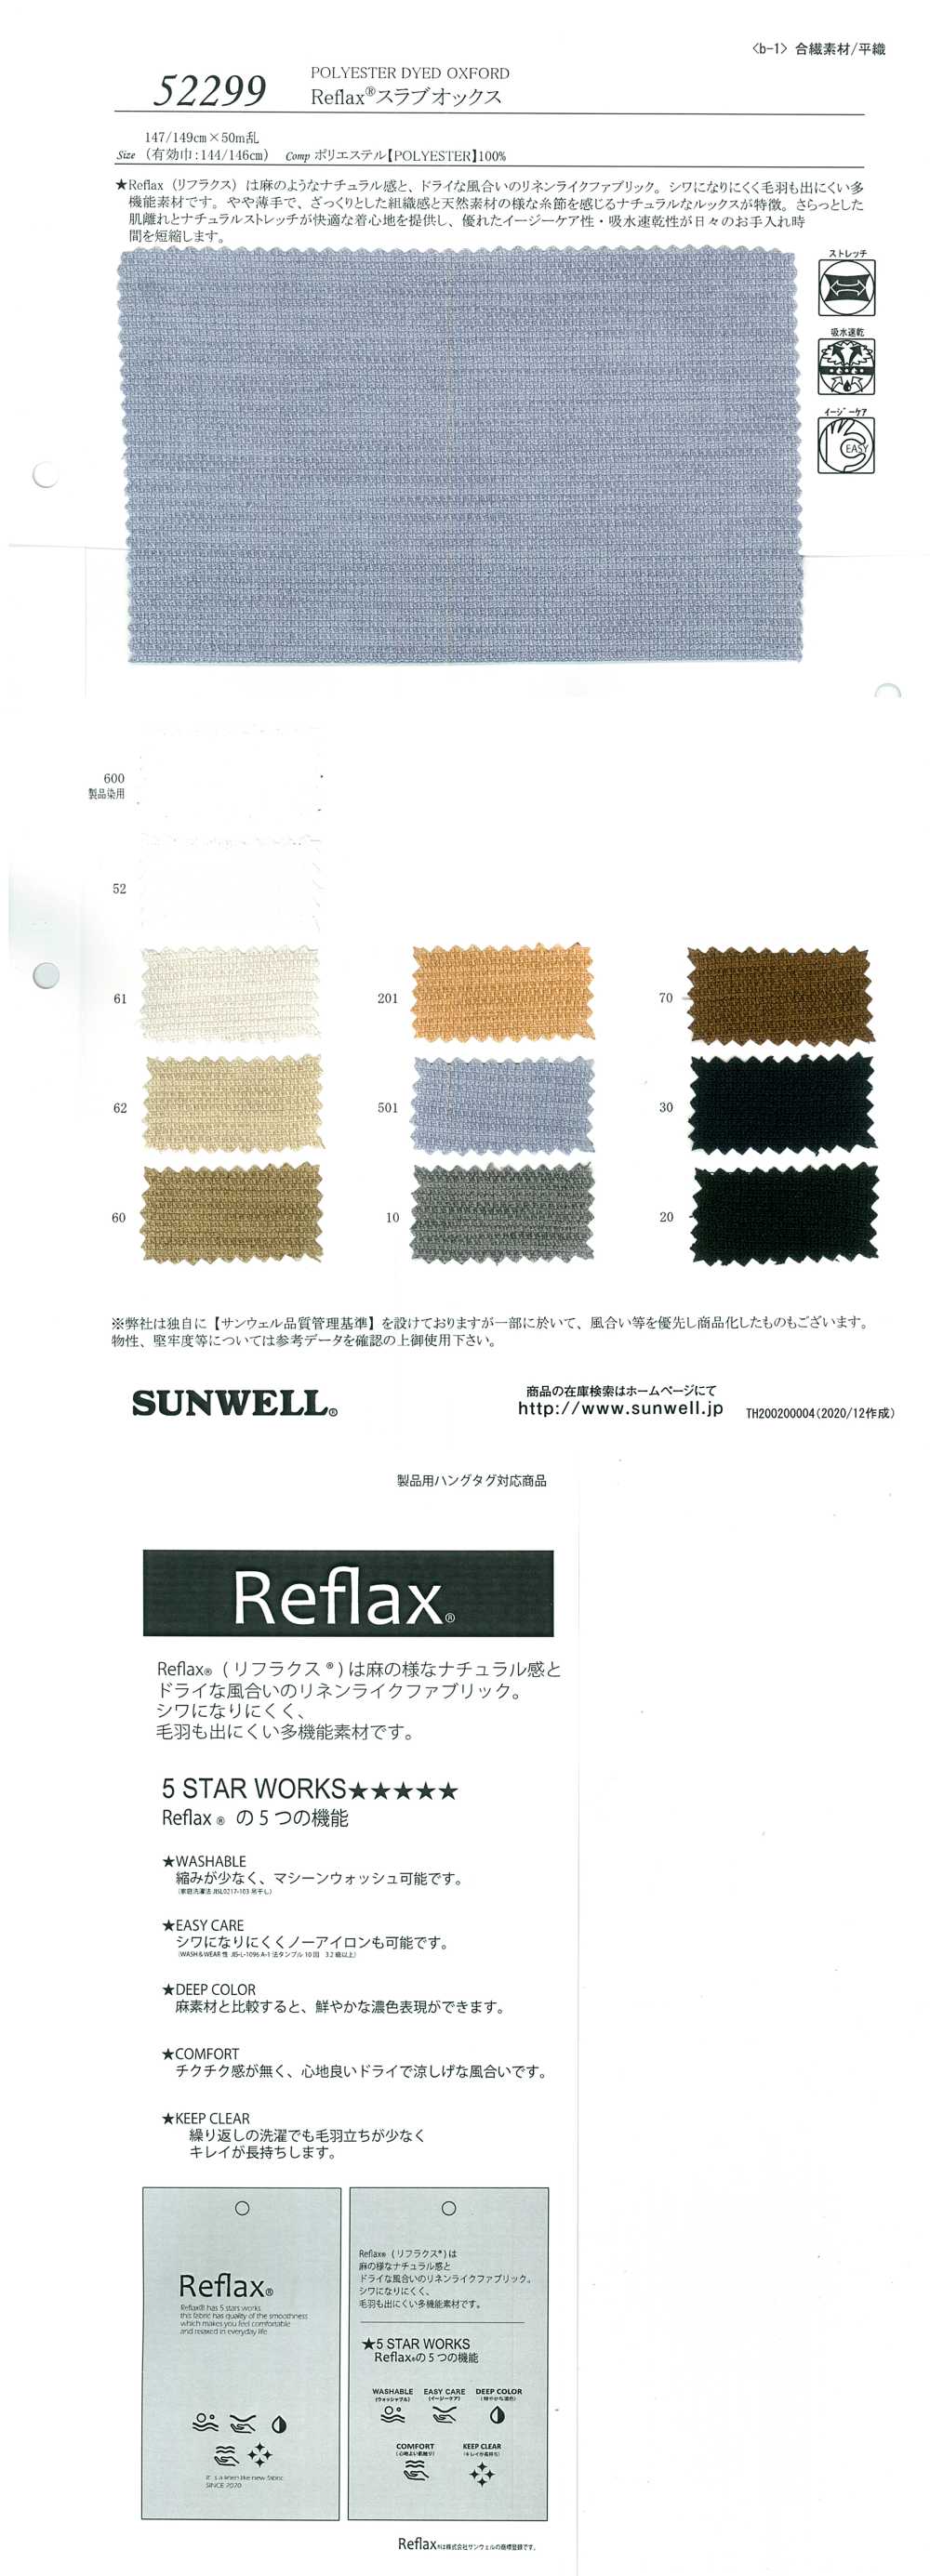 52299 Reflax(R) Slab Oxford[Textile / Fabric] SUNWELL